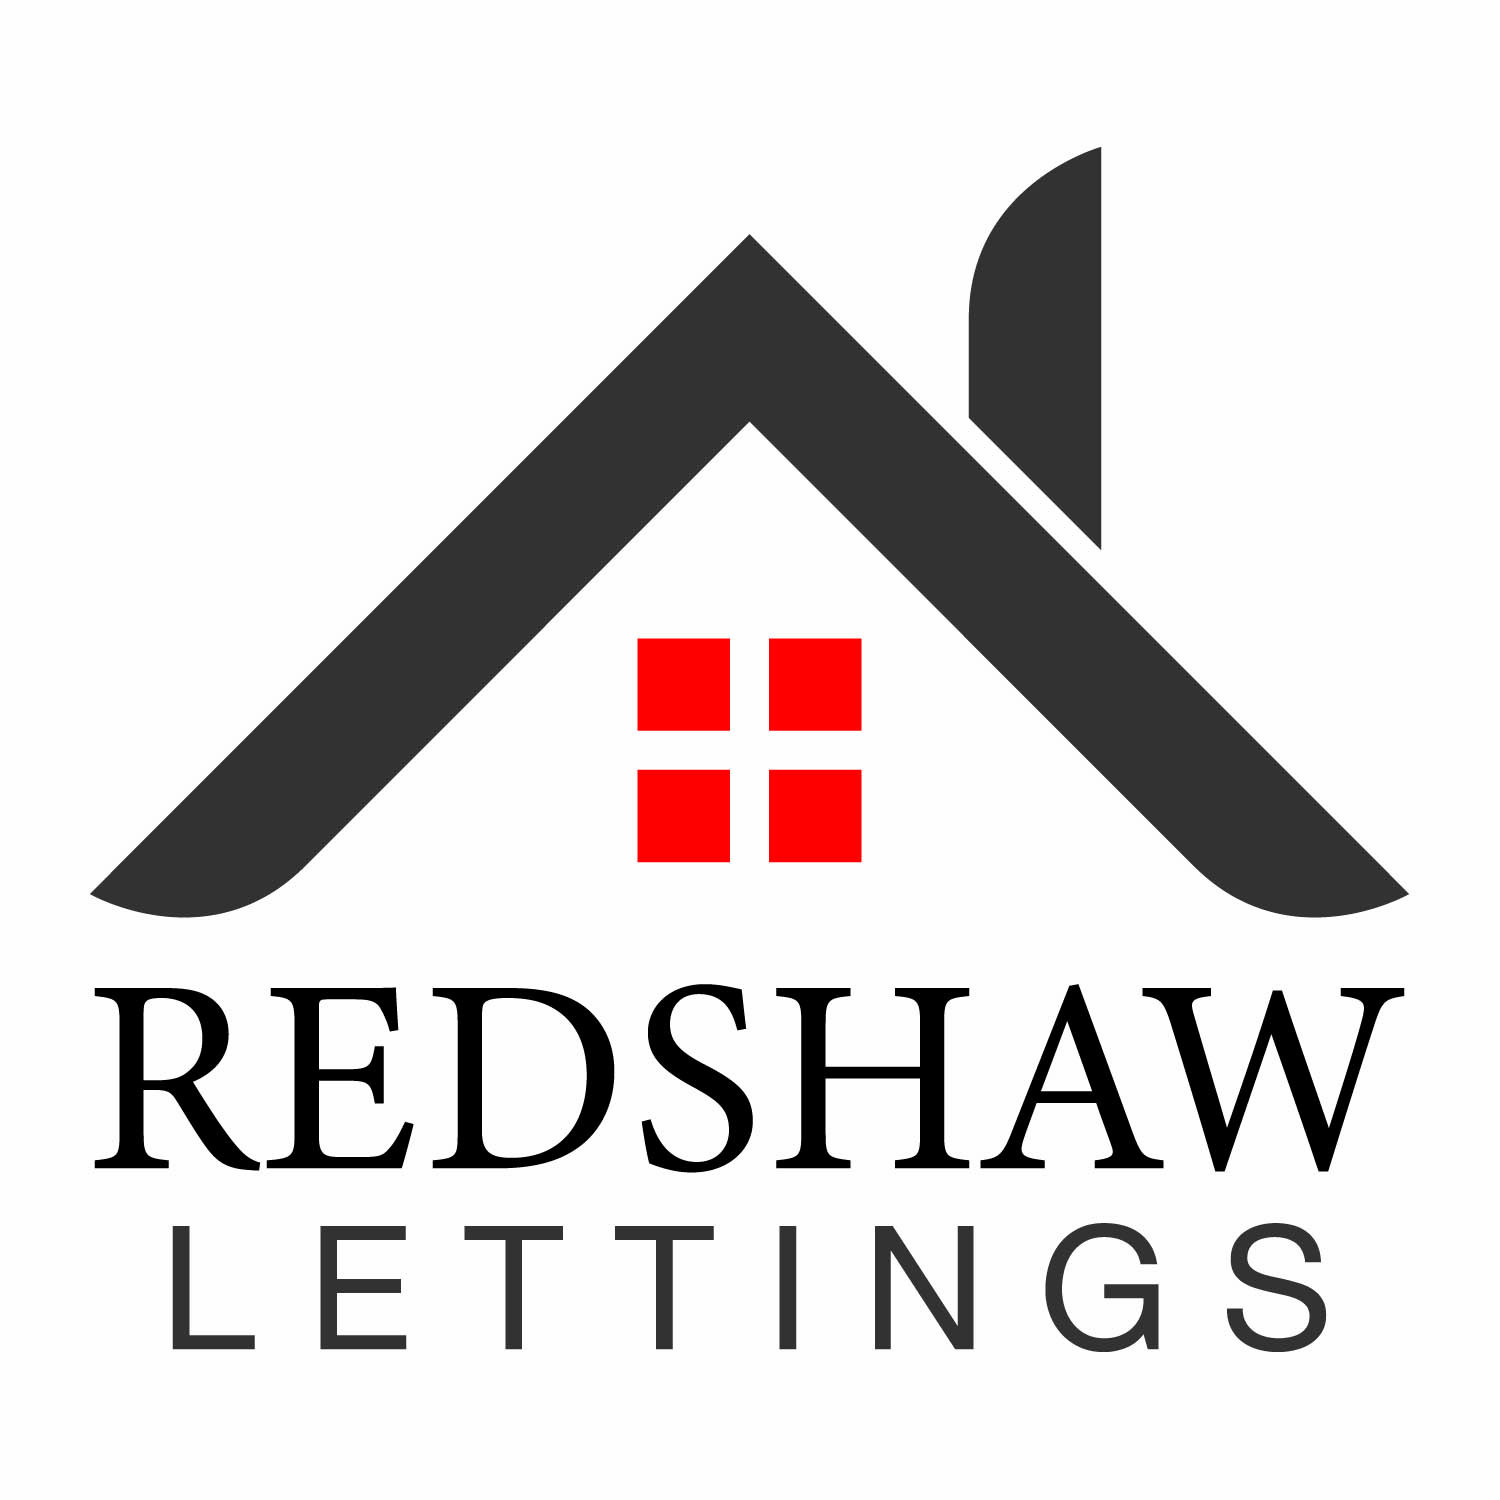 Redshaw Lettings